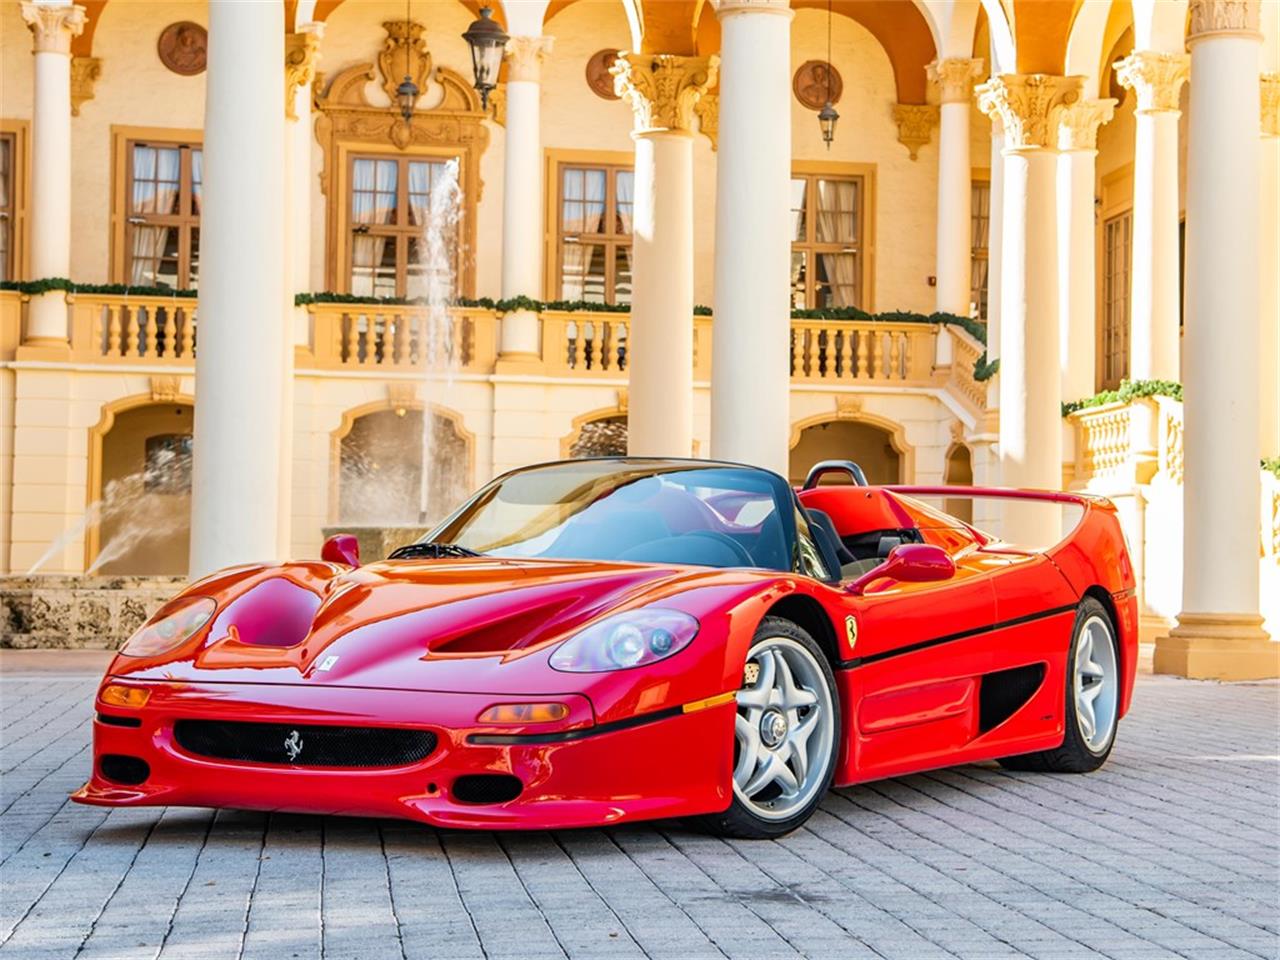 For Sale at Auction: 1995 Ferrari F50 in Monterey, California.